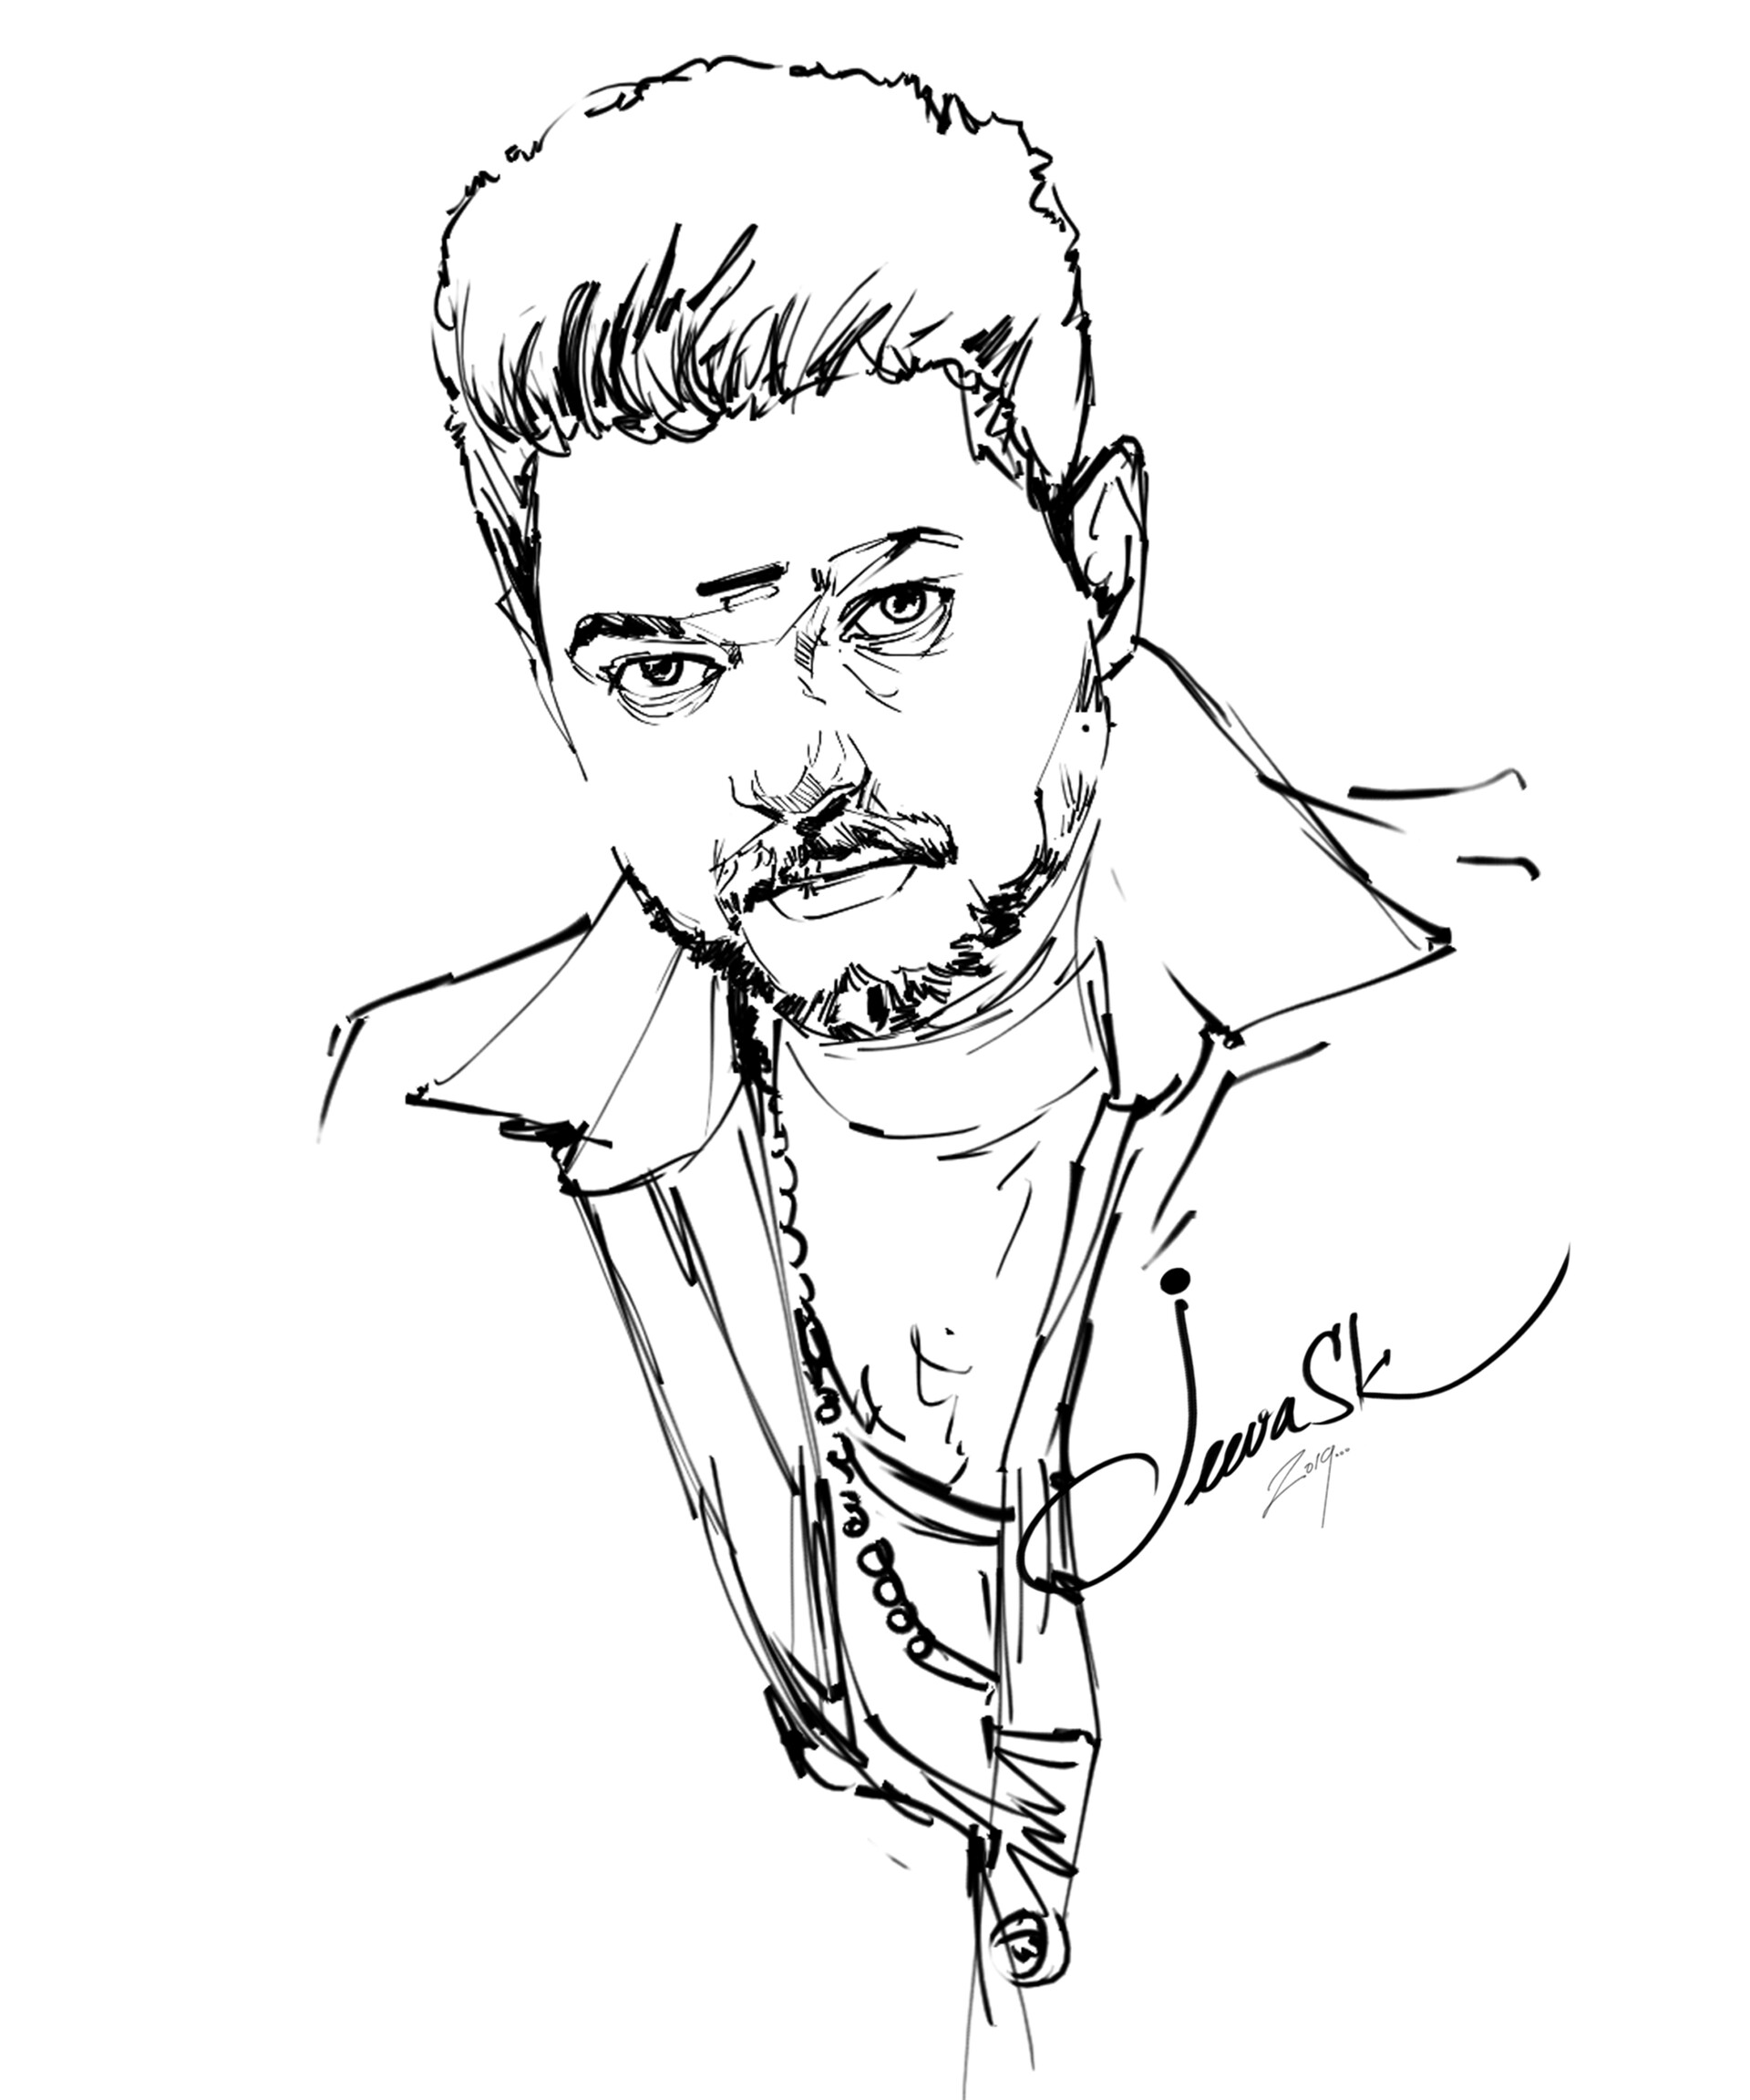 Vijay'sketch from his film Theri Drawing by Rupali Joshi - Fine Art America